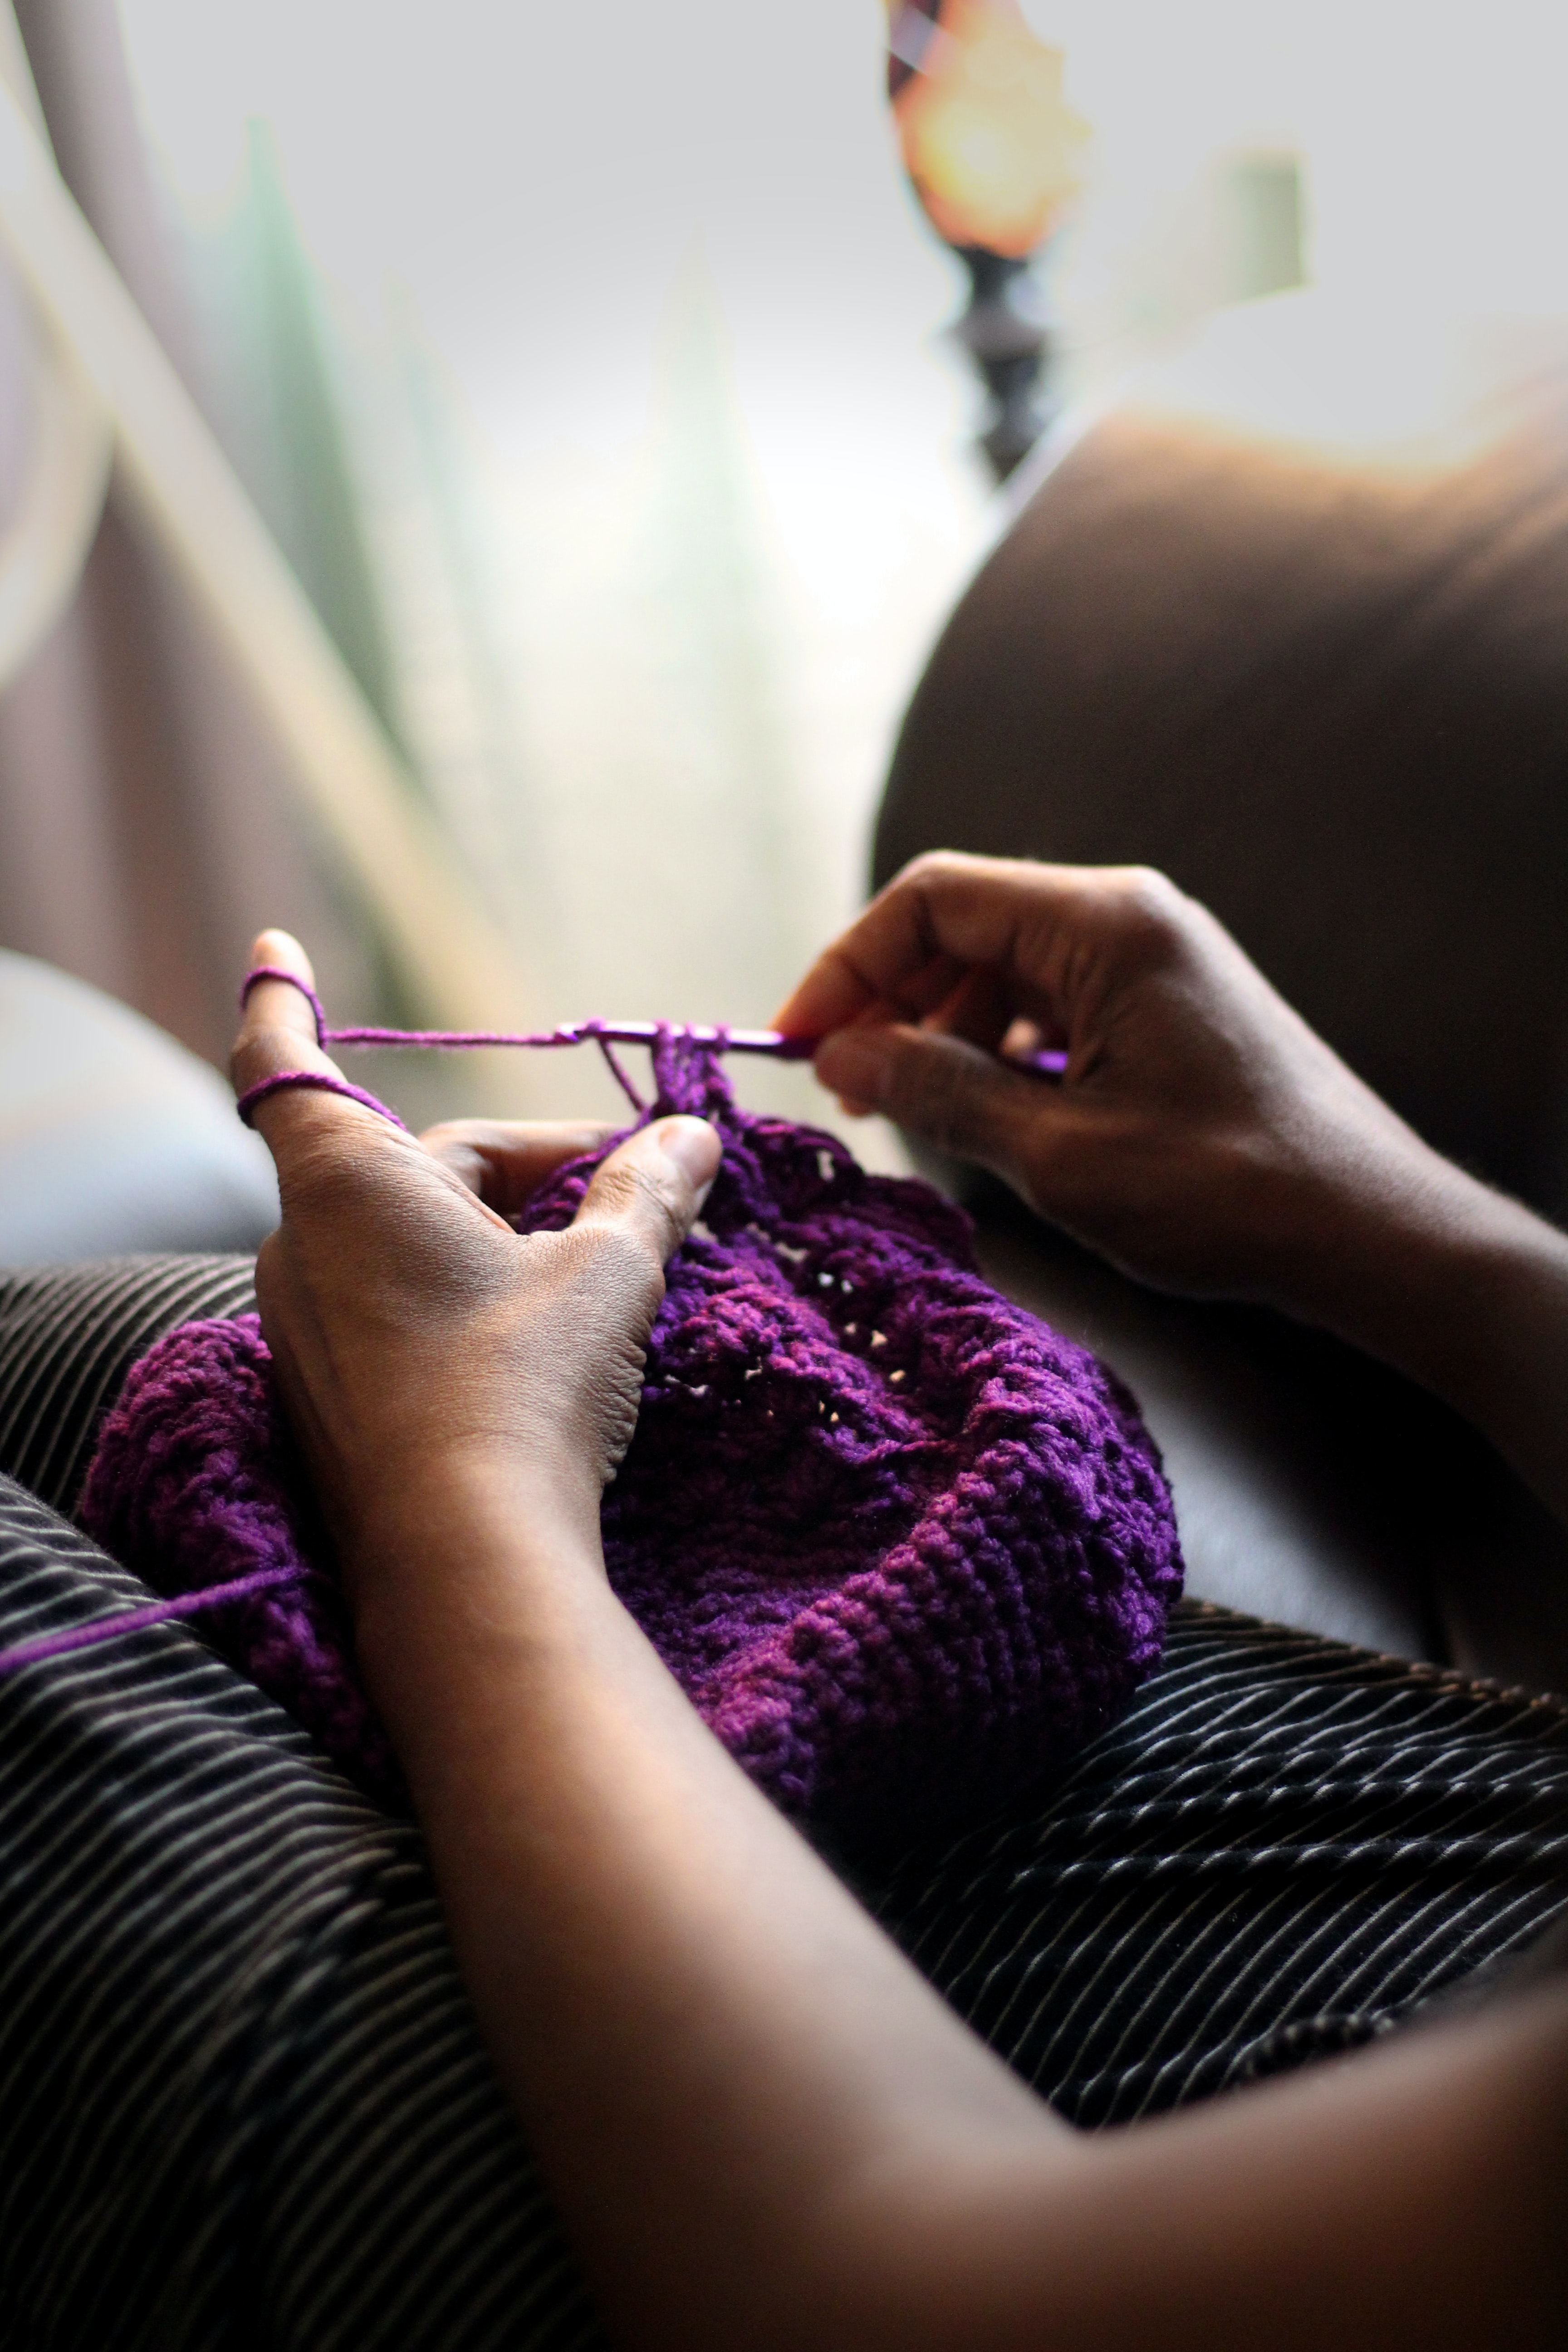 Person crocheting with purple yarn